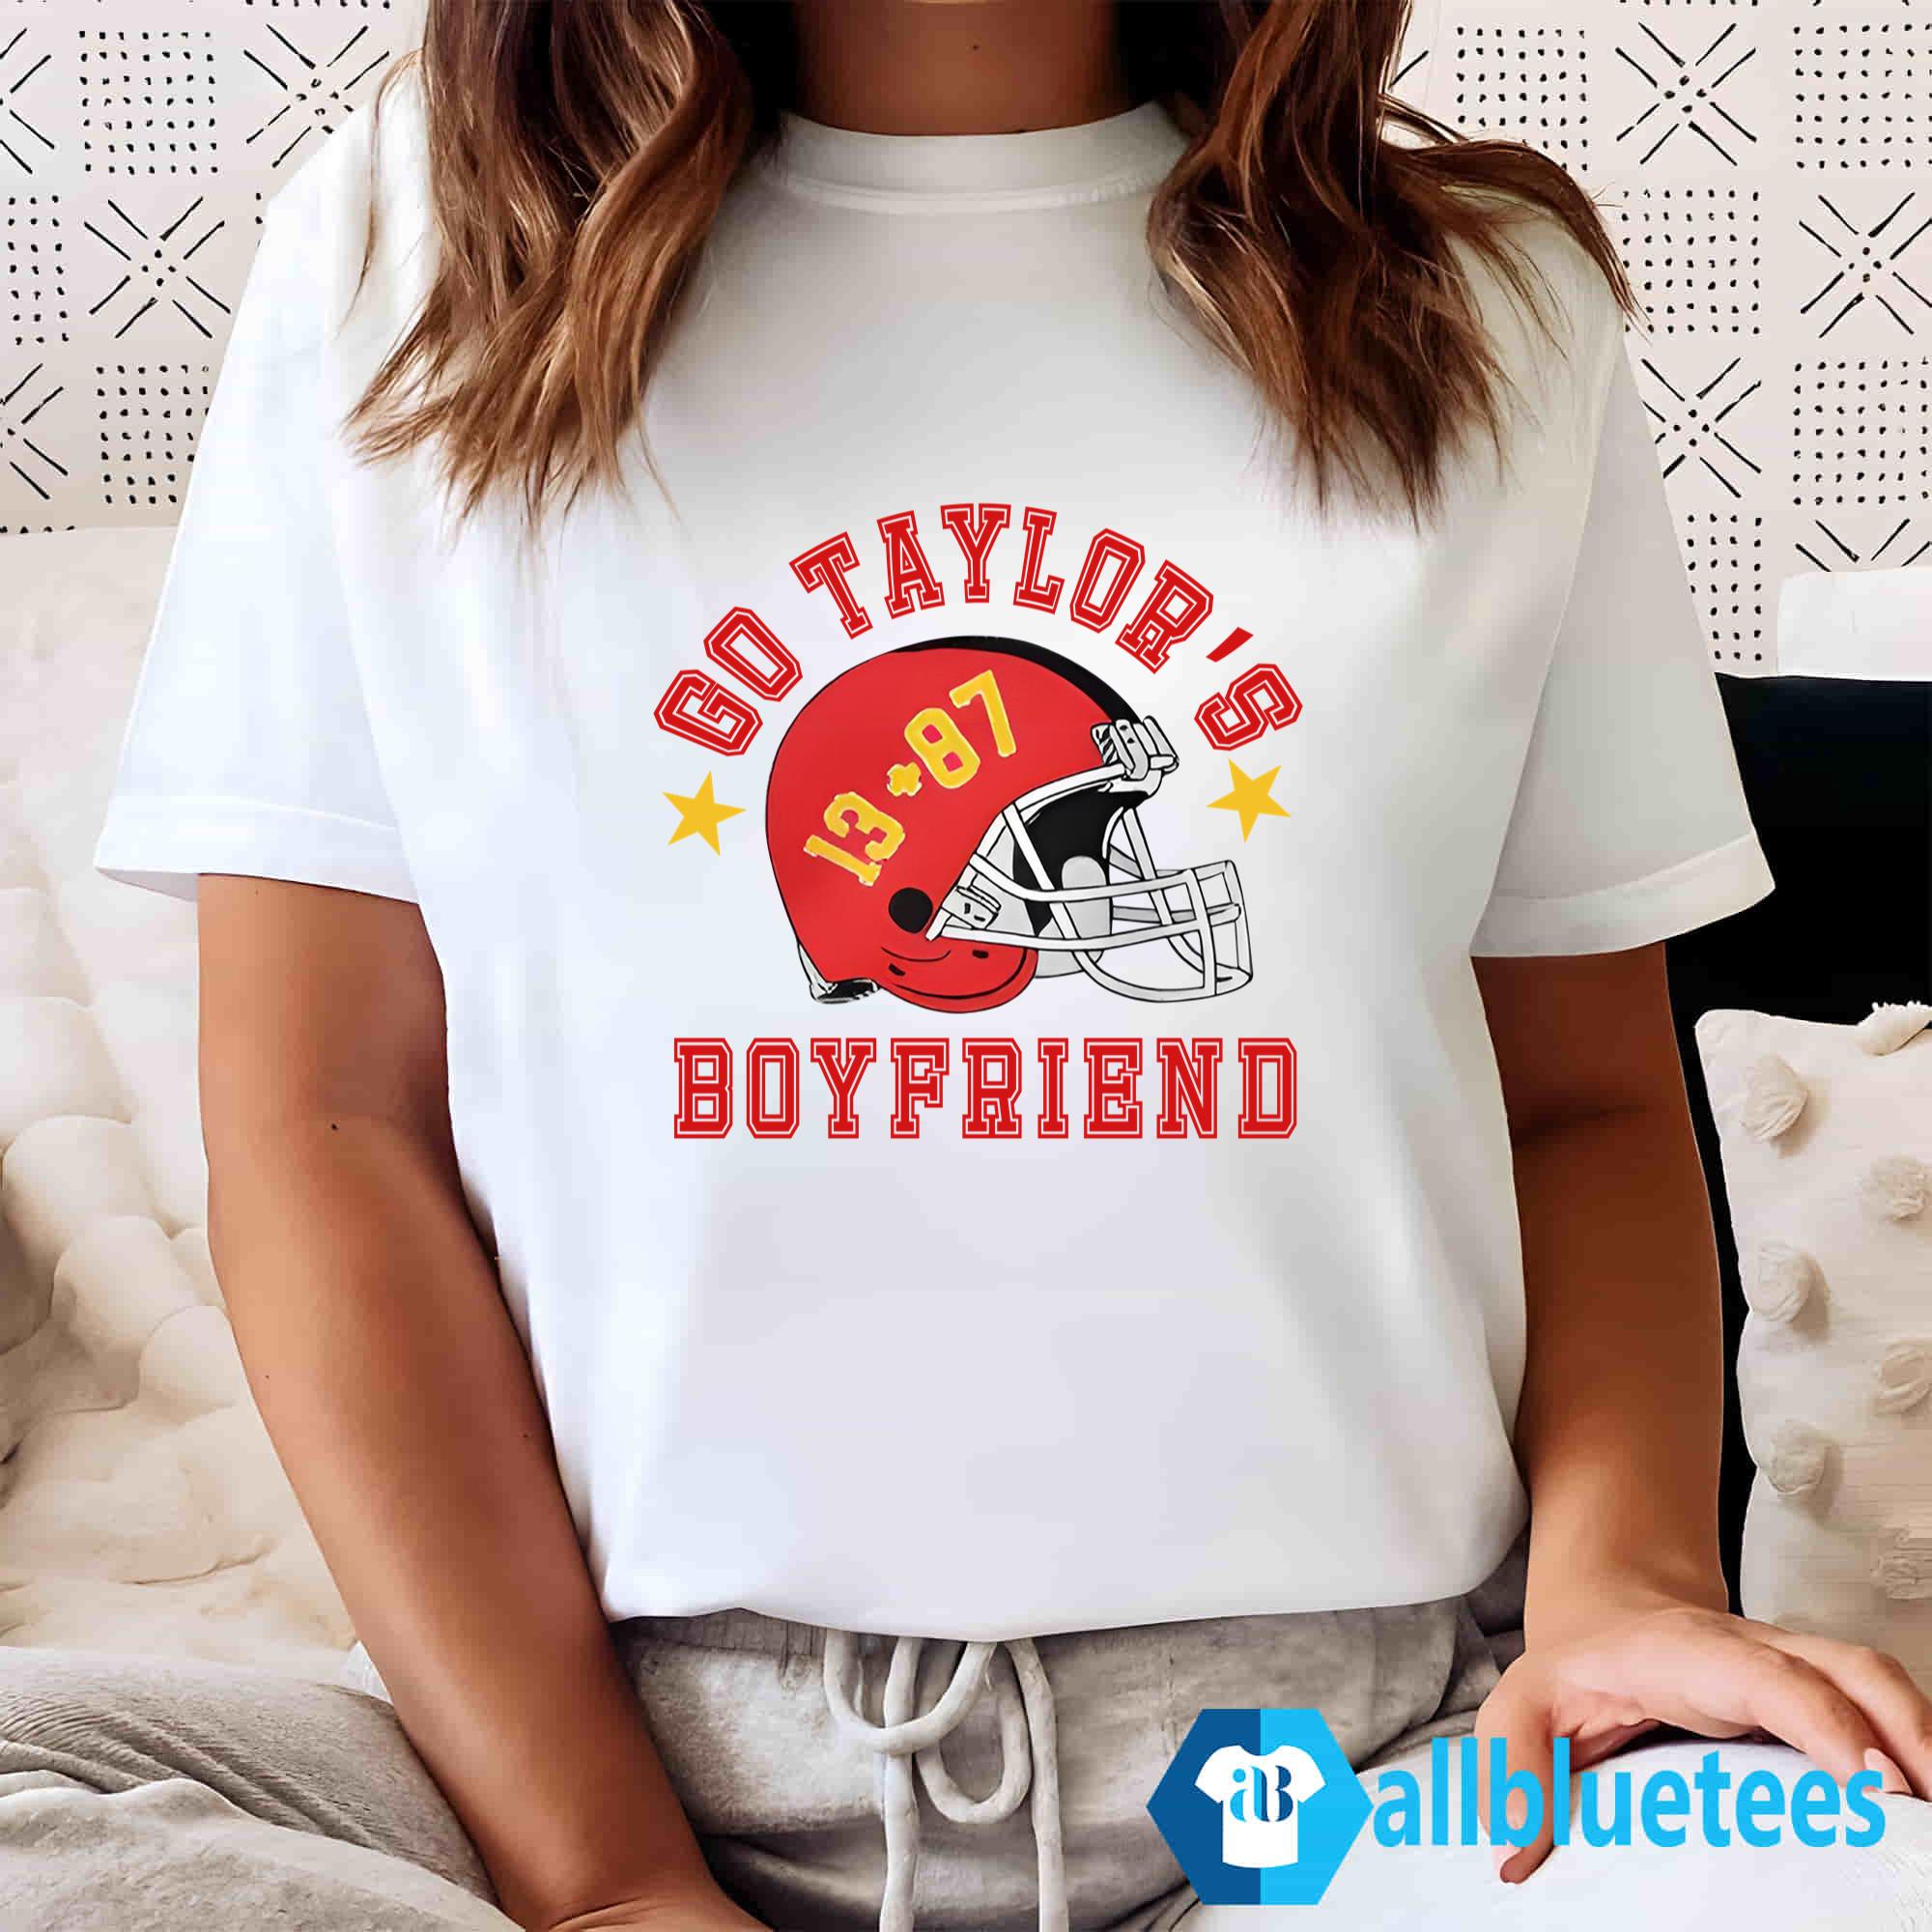 Go Taylor's Boyfriend 13-87 Sweatshirt & Shirt